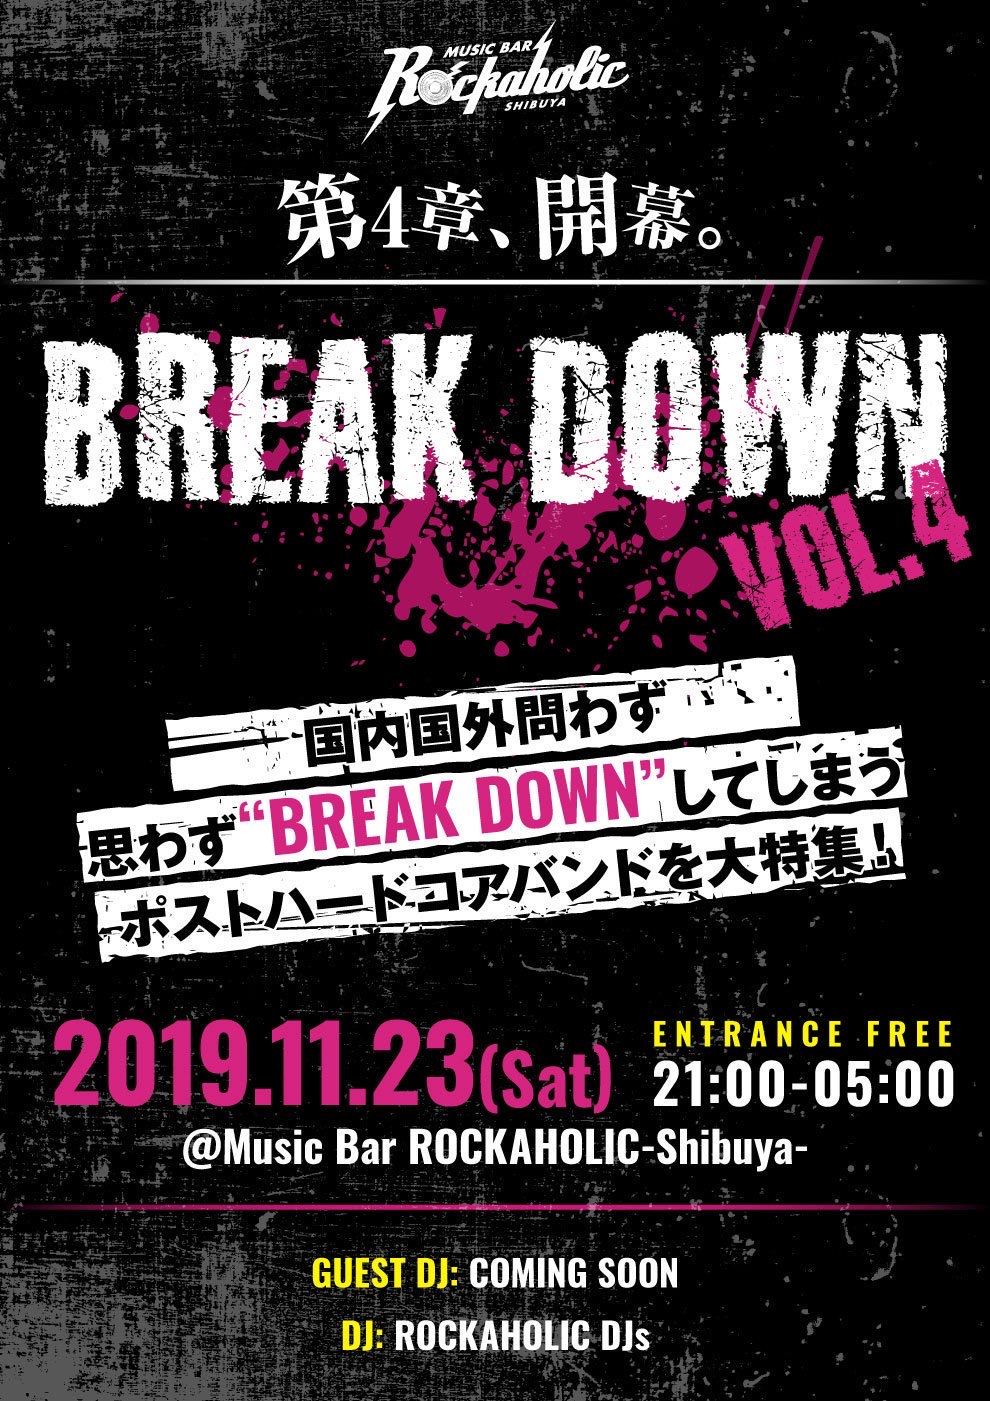 https://bar-rockaholic.jp/shibuya/blog/3A905BCB-0E53-4BA0-902D-FED5441EC72A.jpeg